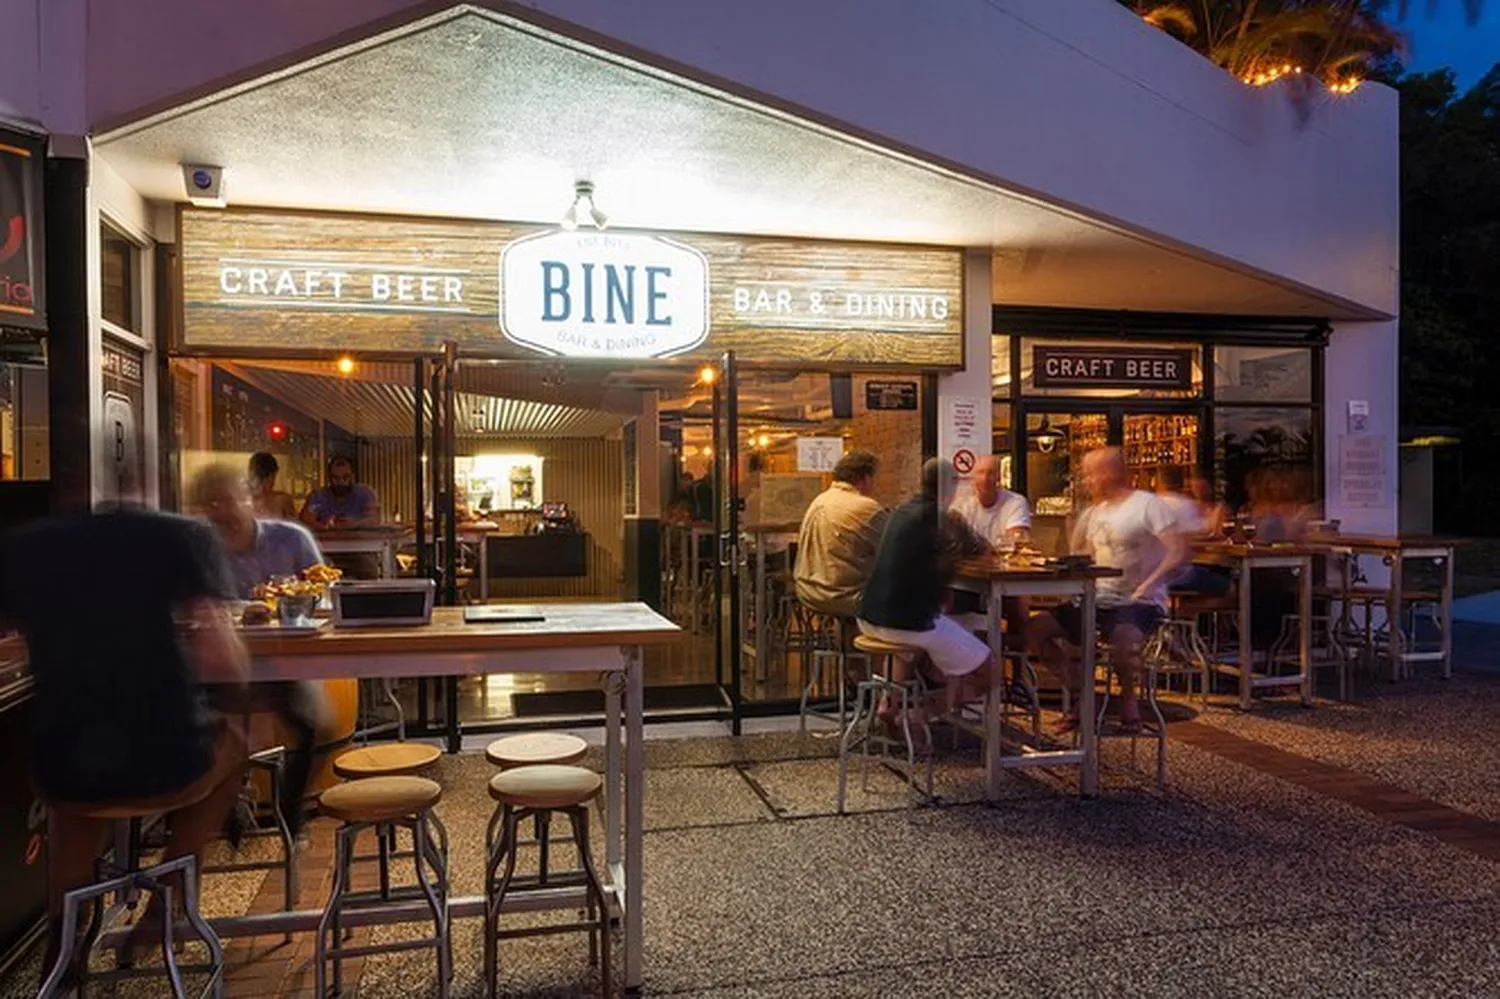 Bine restaurant Gold Coast